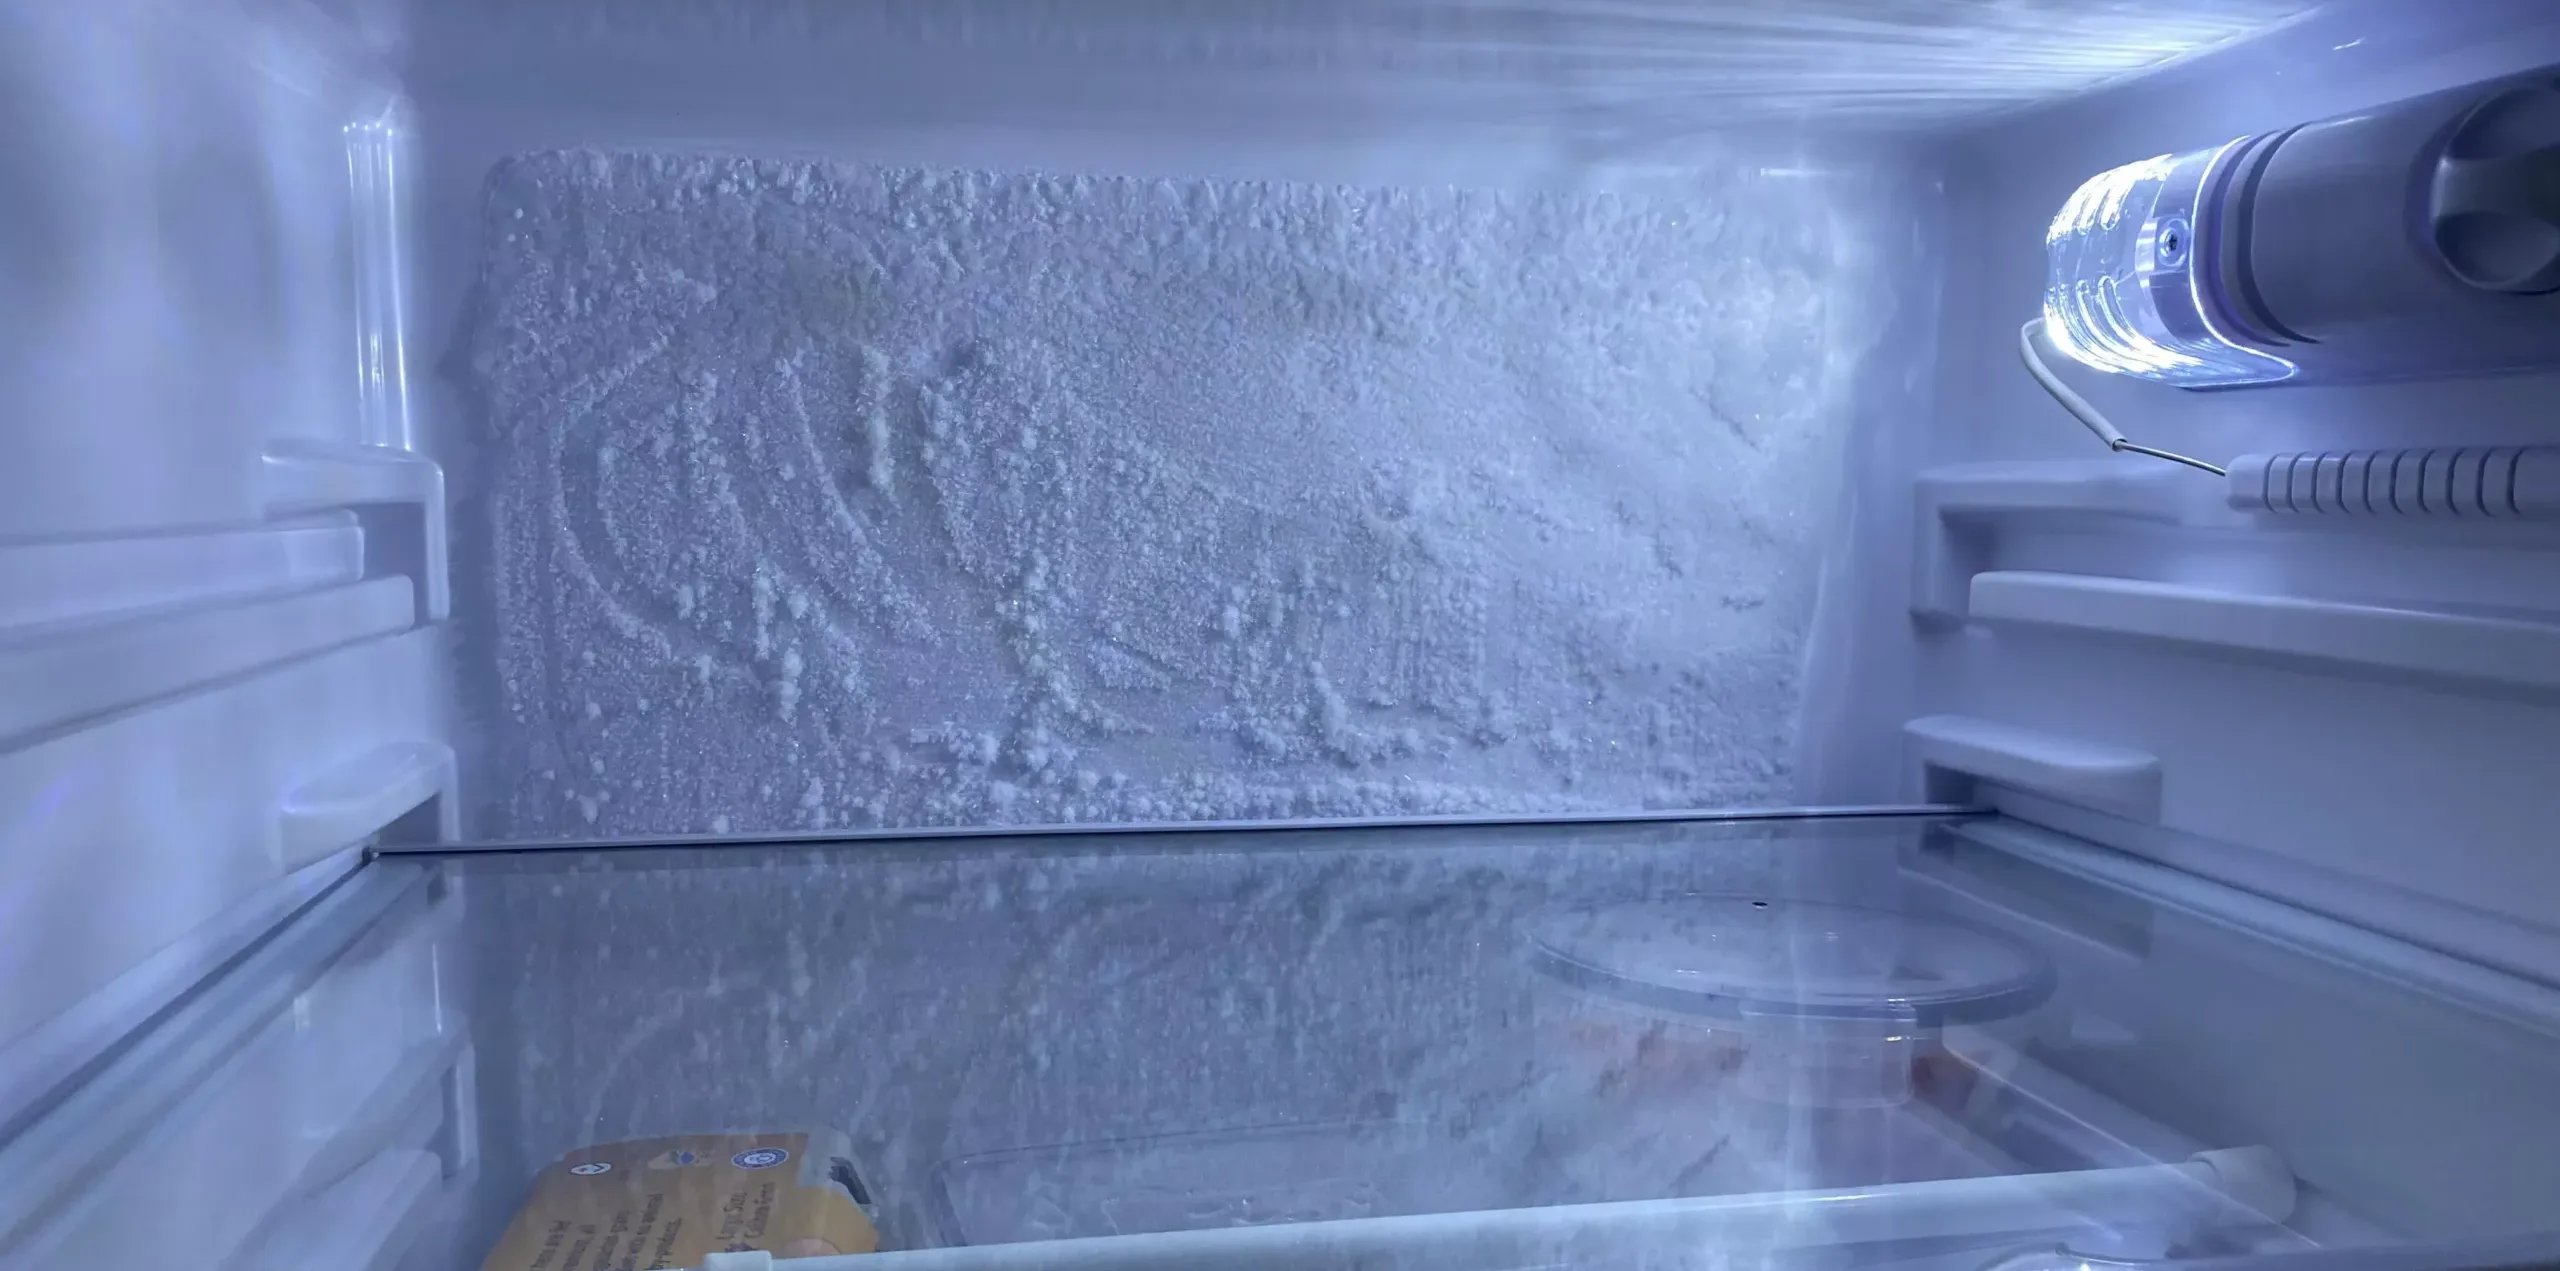 frost buildup inside refrigerator